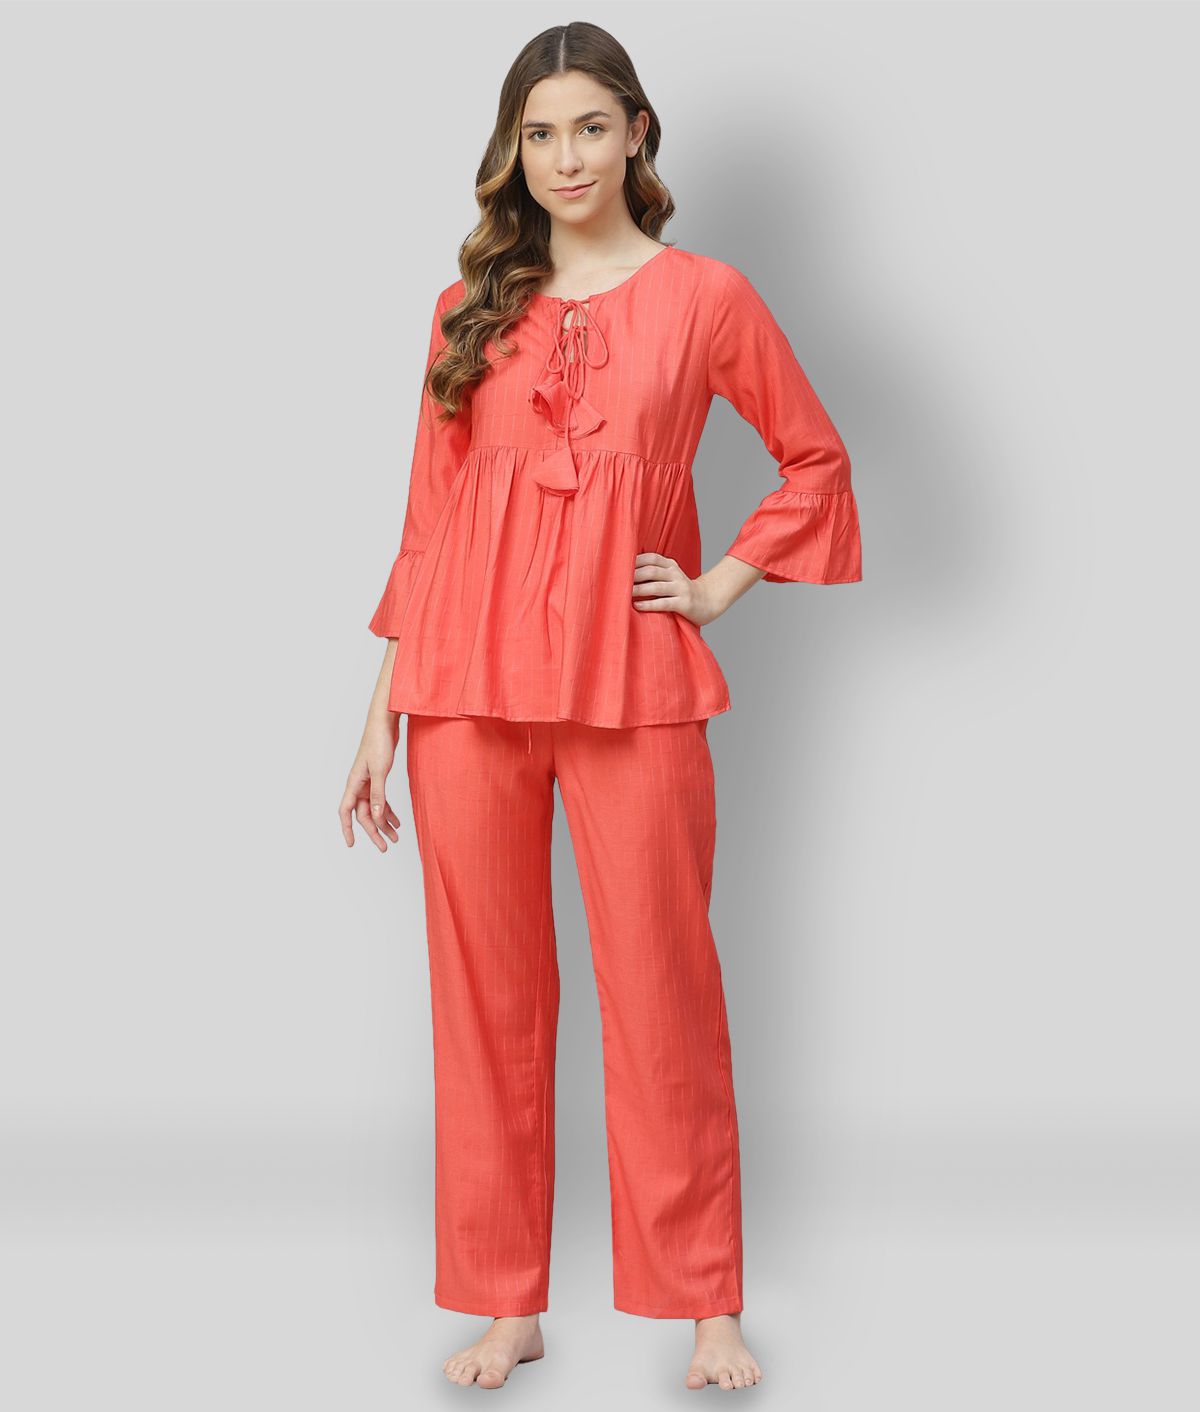 Cottinfab - Orange Cotton Women's Nightwear Nightsuit Sets ( Pack of 1 )